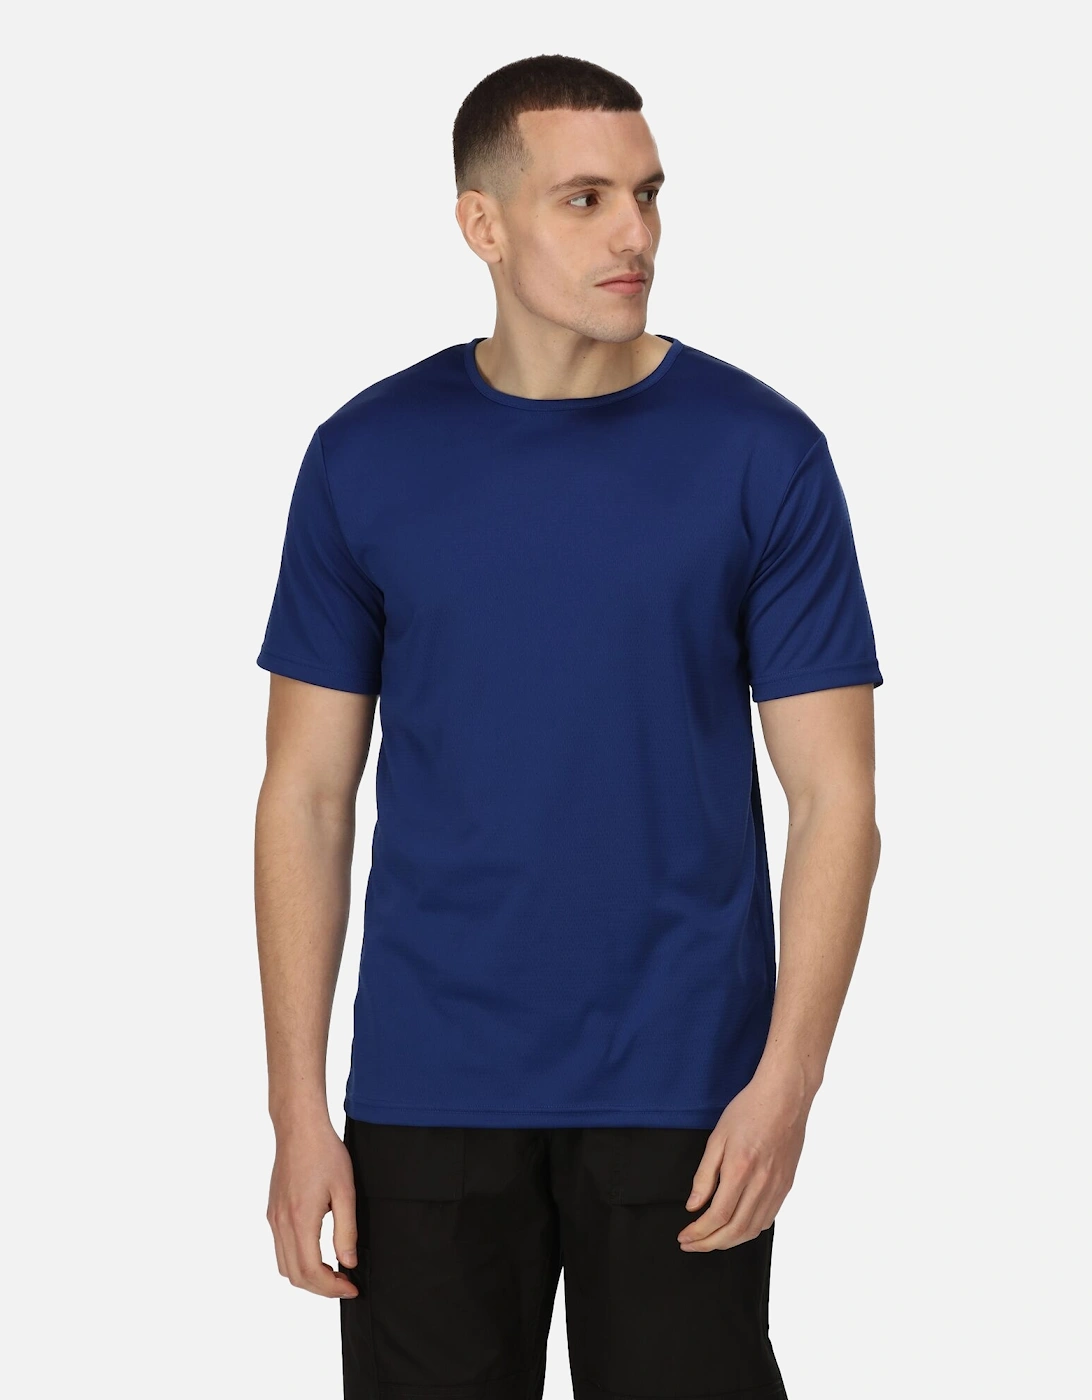 Mens Pro Reflective Moisture Wicking T-Shirt